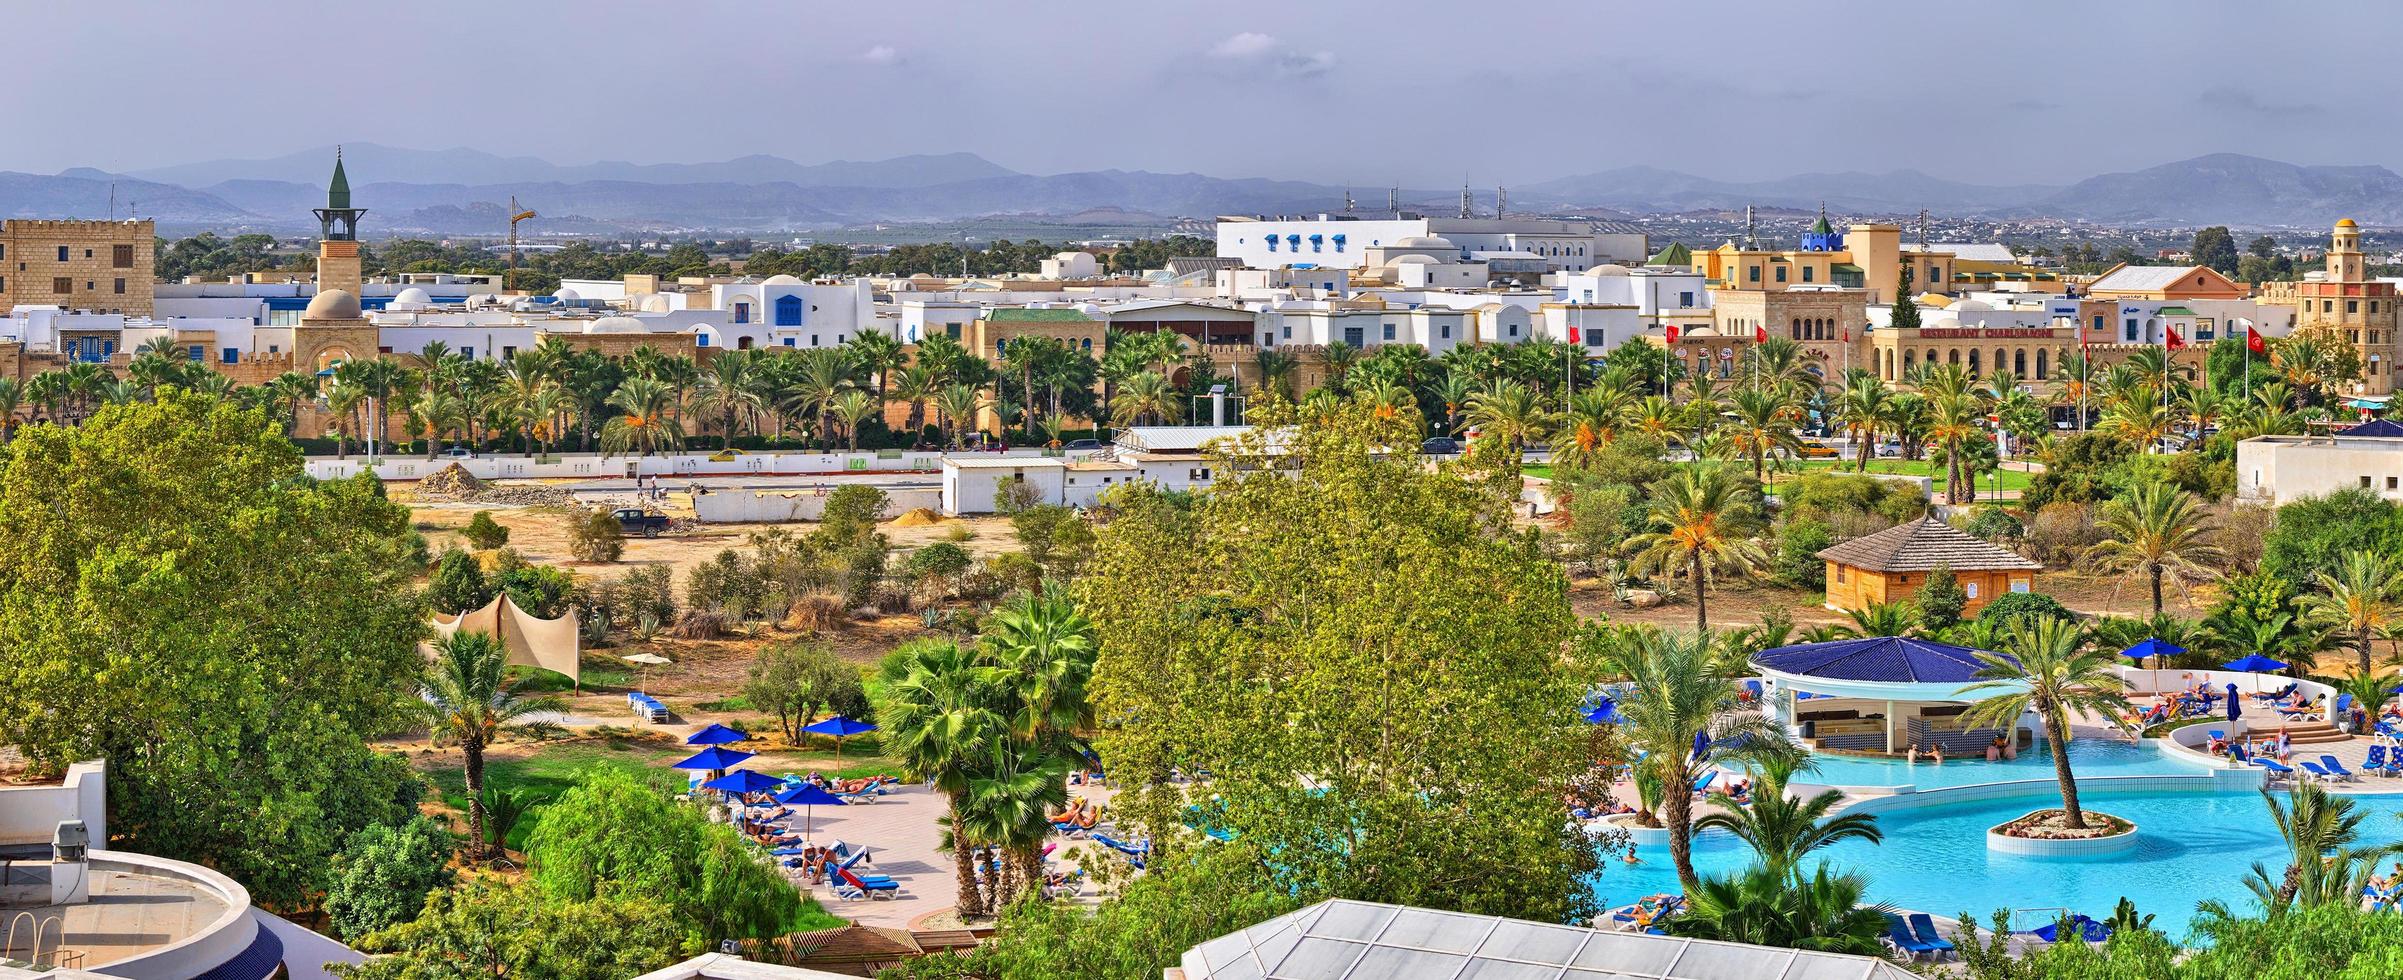 Hammamet, Tunesien - Oktober 2014 Swimmingpool im Luxushotel am 10. Oktober 2014 in Hammamet, Tunesien foto